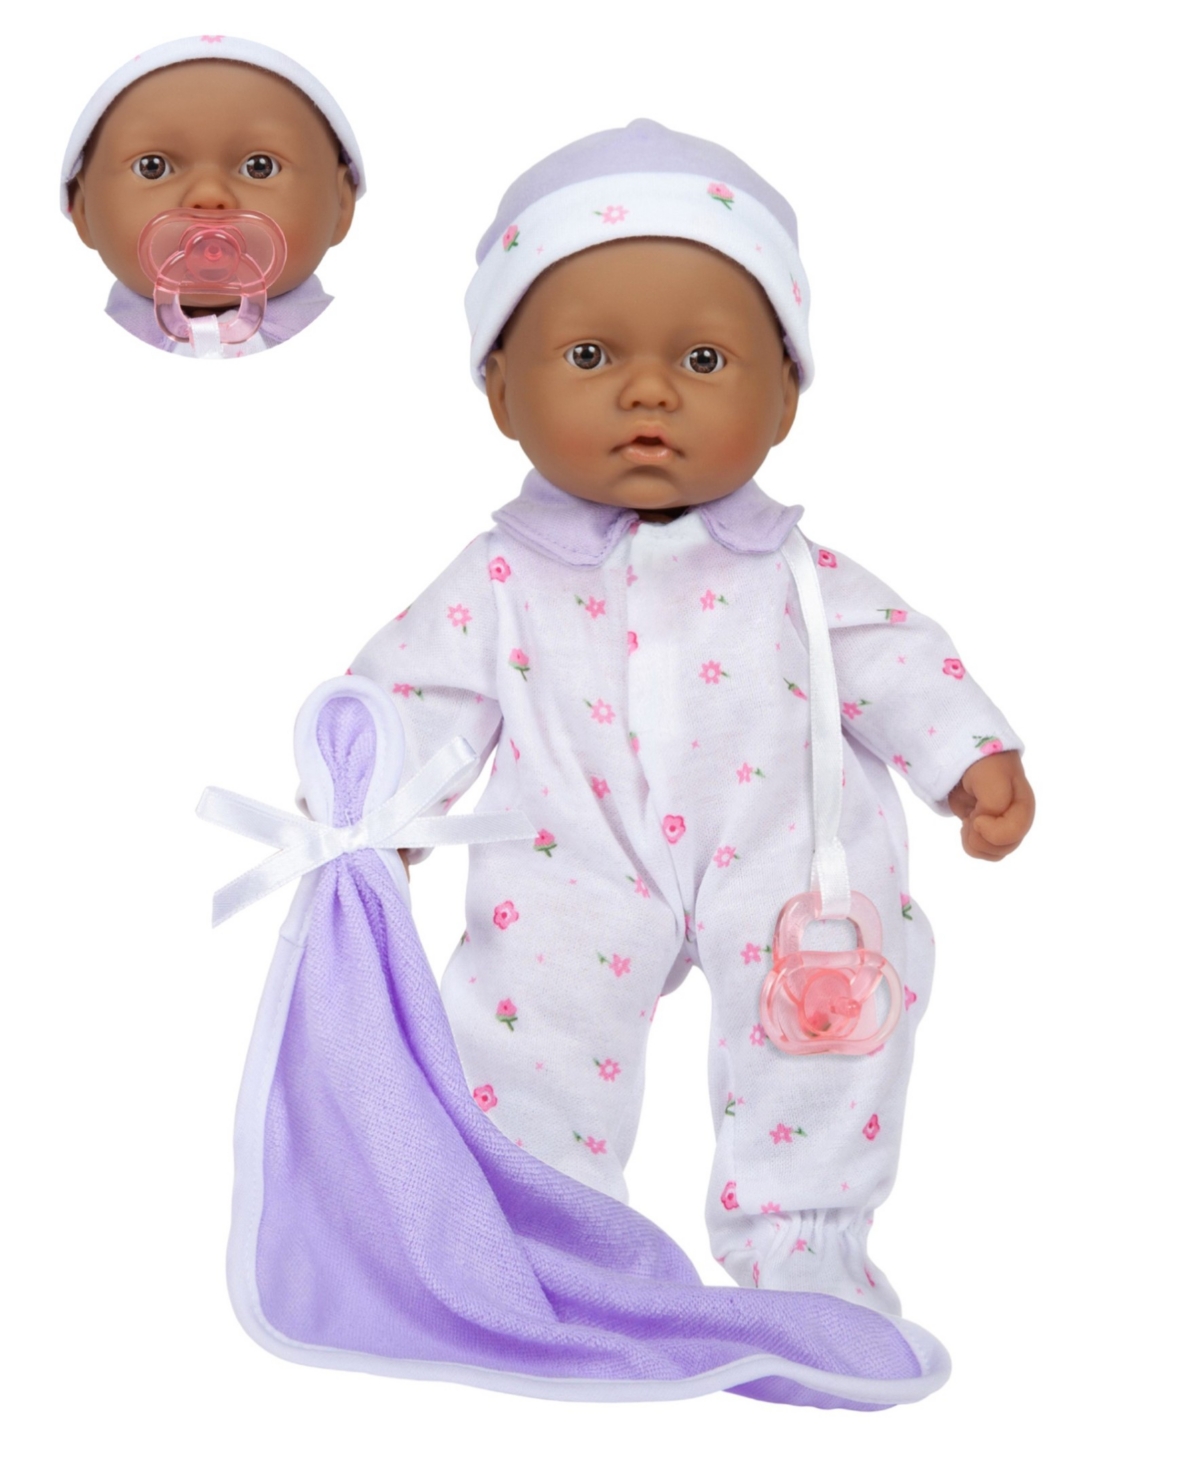 Jc Toys La Baby Hispanic 11" Soft Body Baby Doll Purple Outfit In Hispanic - Purple